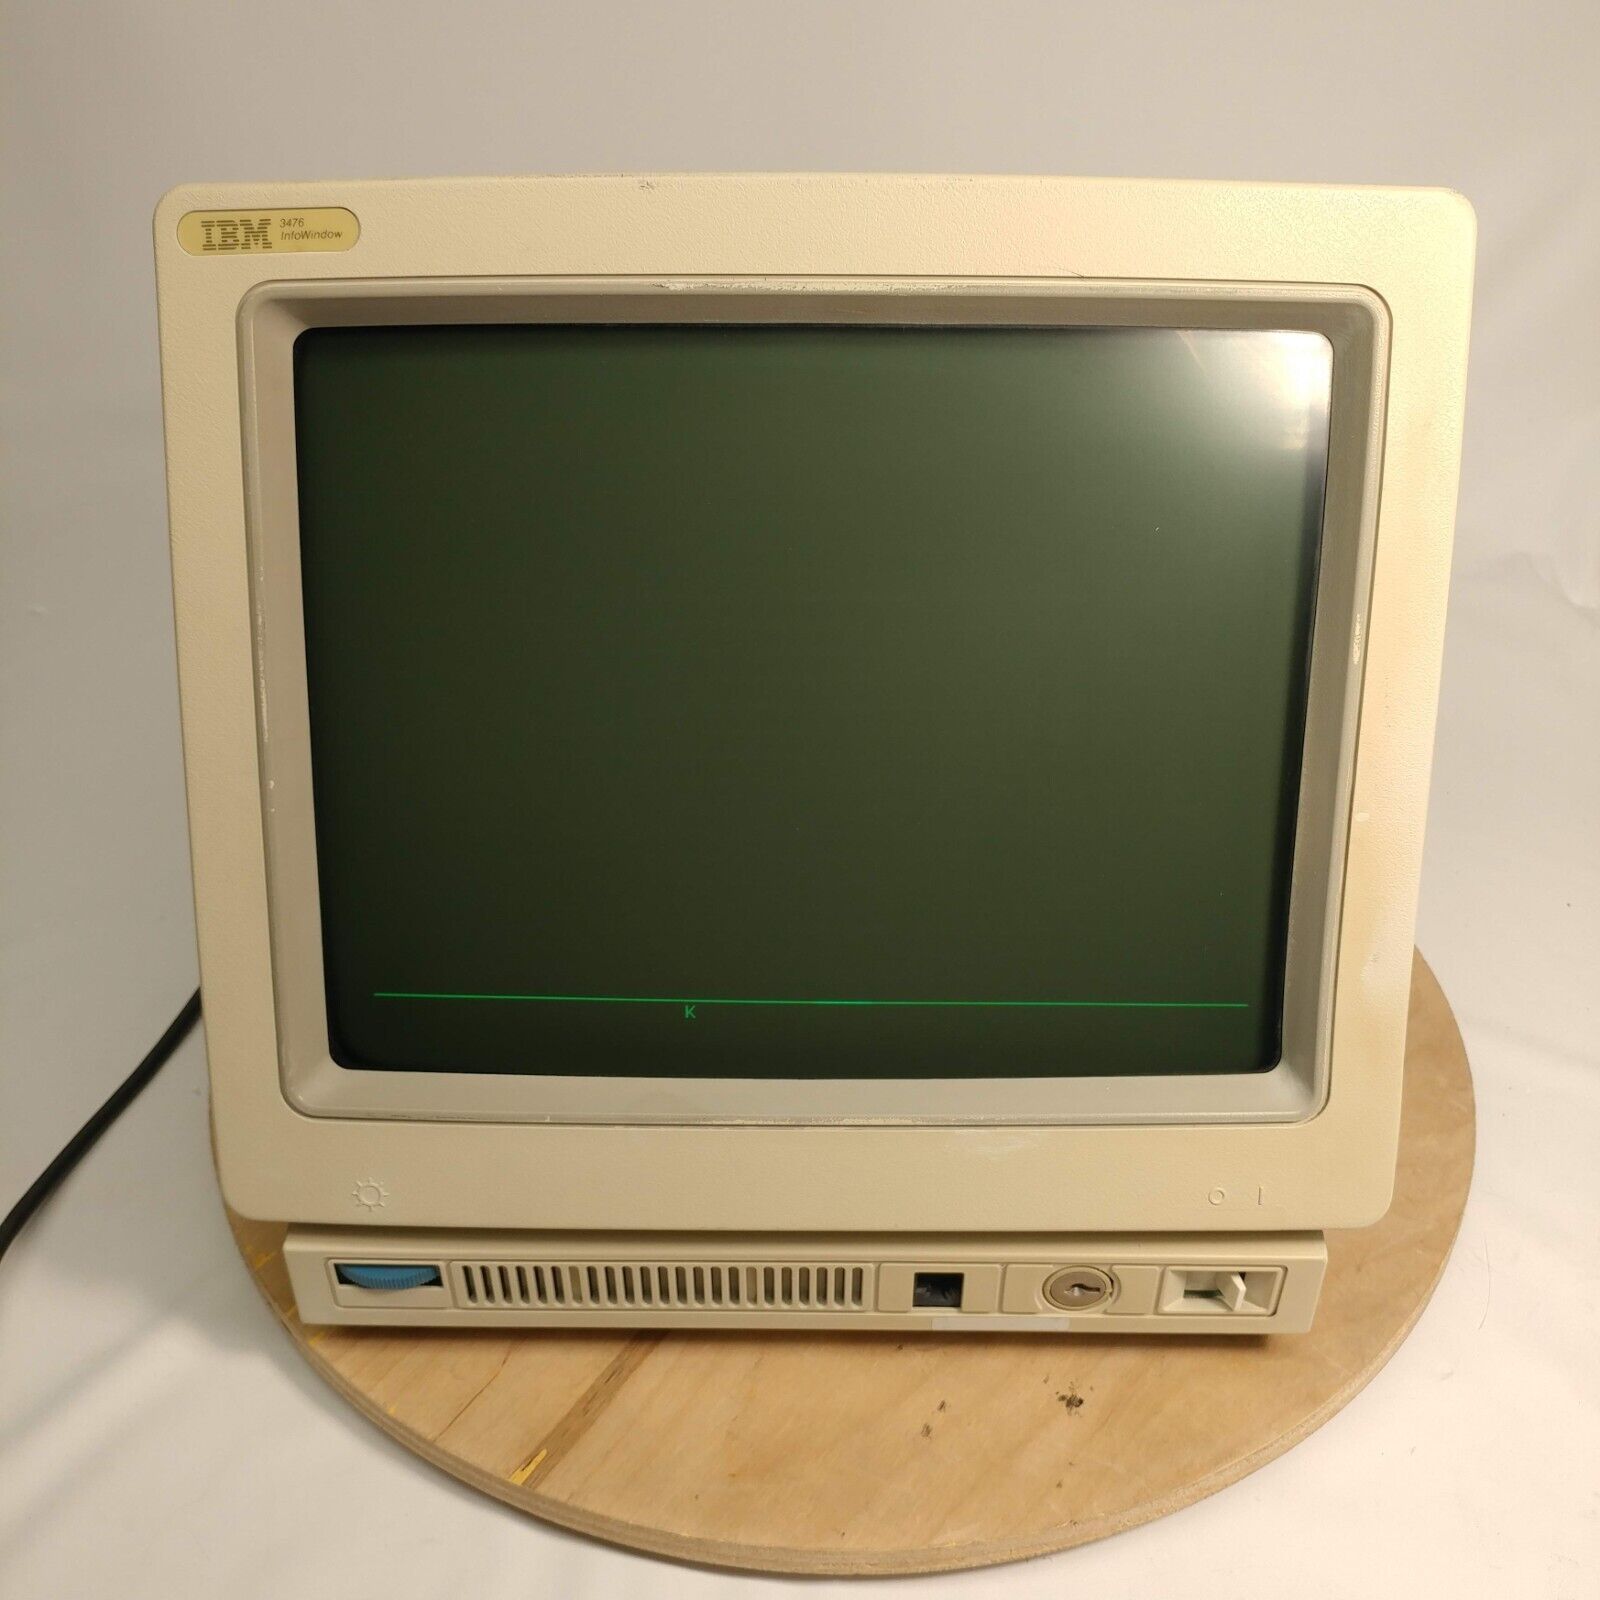 IBM 3476 InfoWindow Green Twinax Dumb Terminal Workstation Vintage Case Damaged